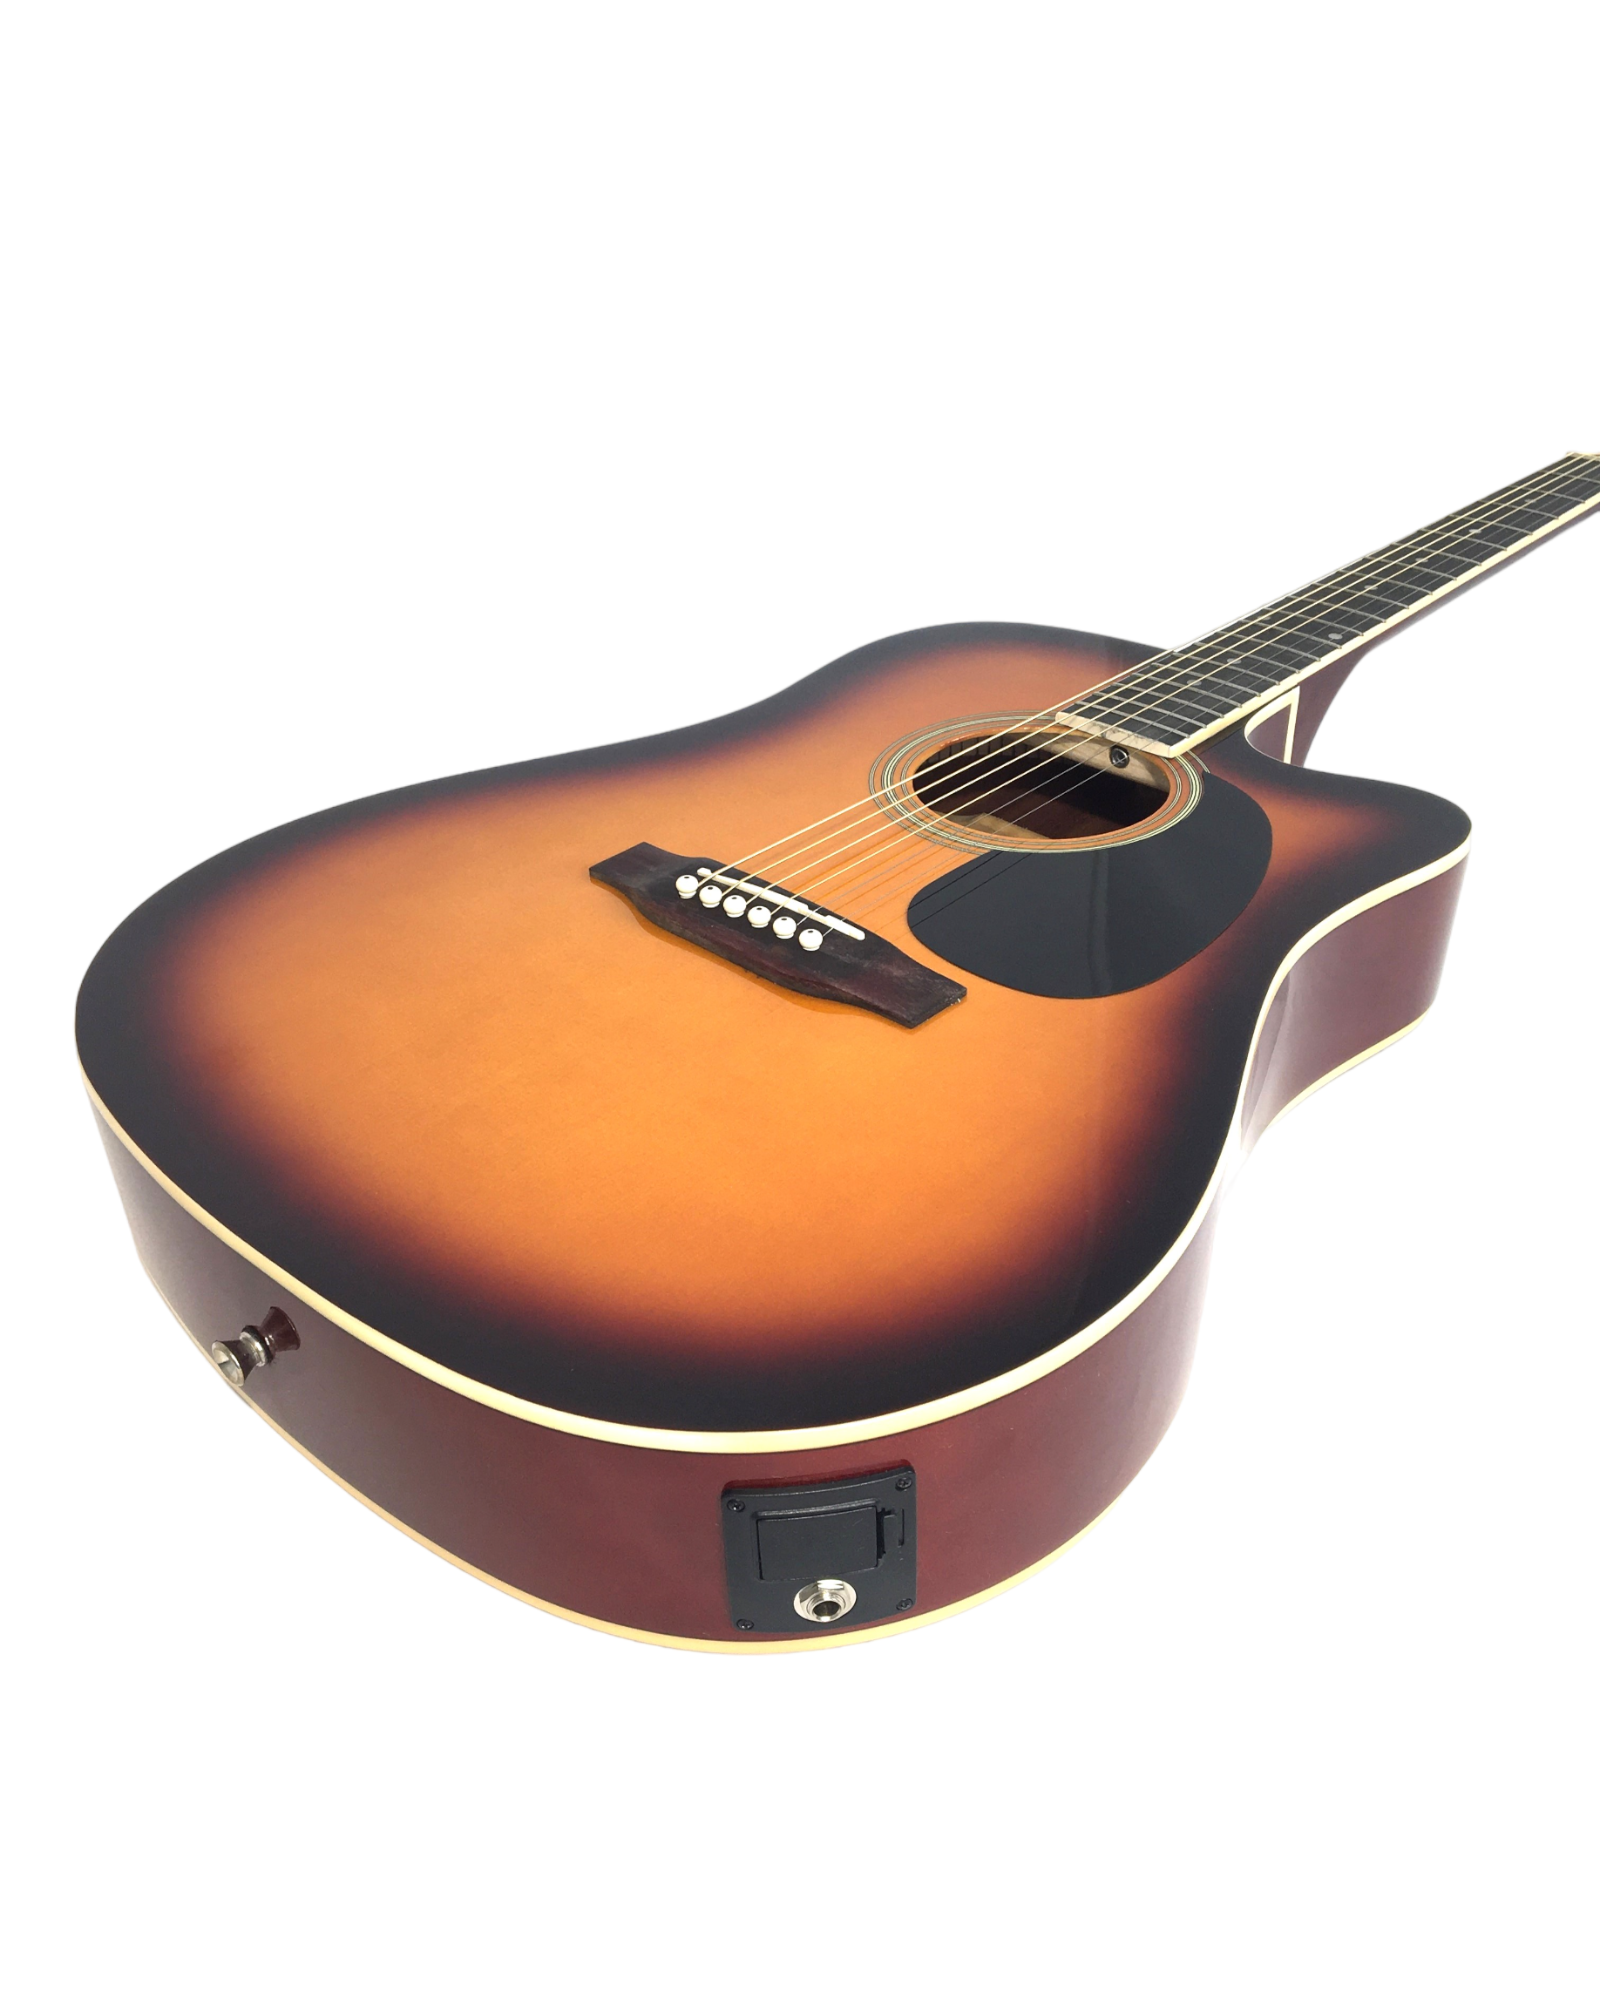 Haze Thin-Body Built-In Pickups/Tuner Acoustic Guitar - Sunburst